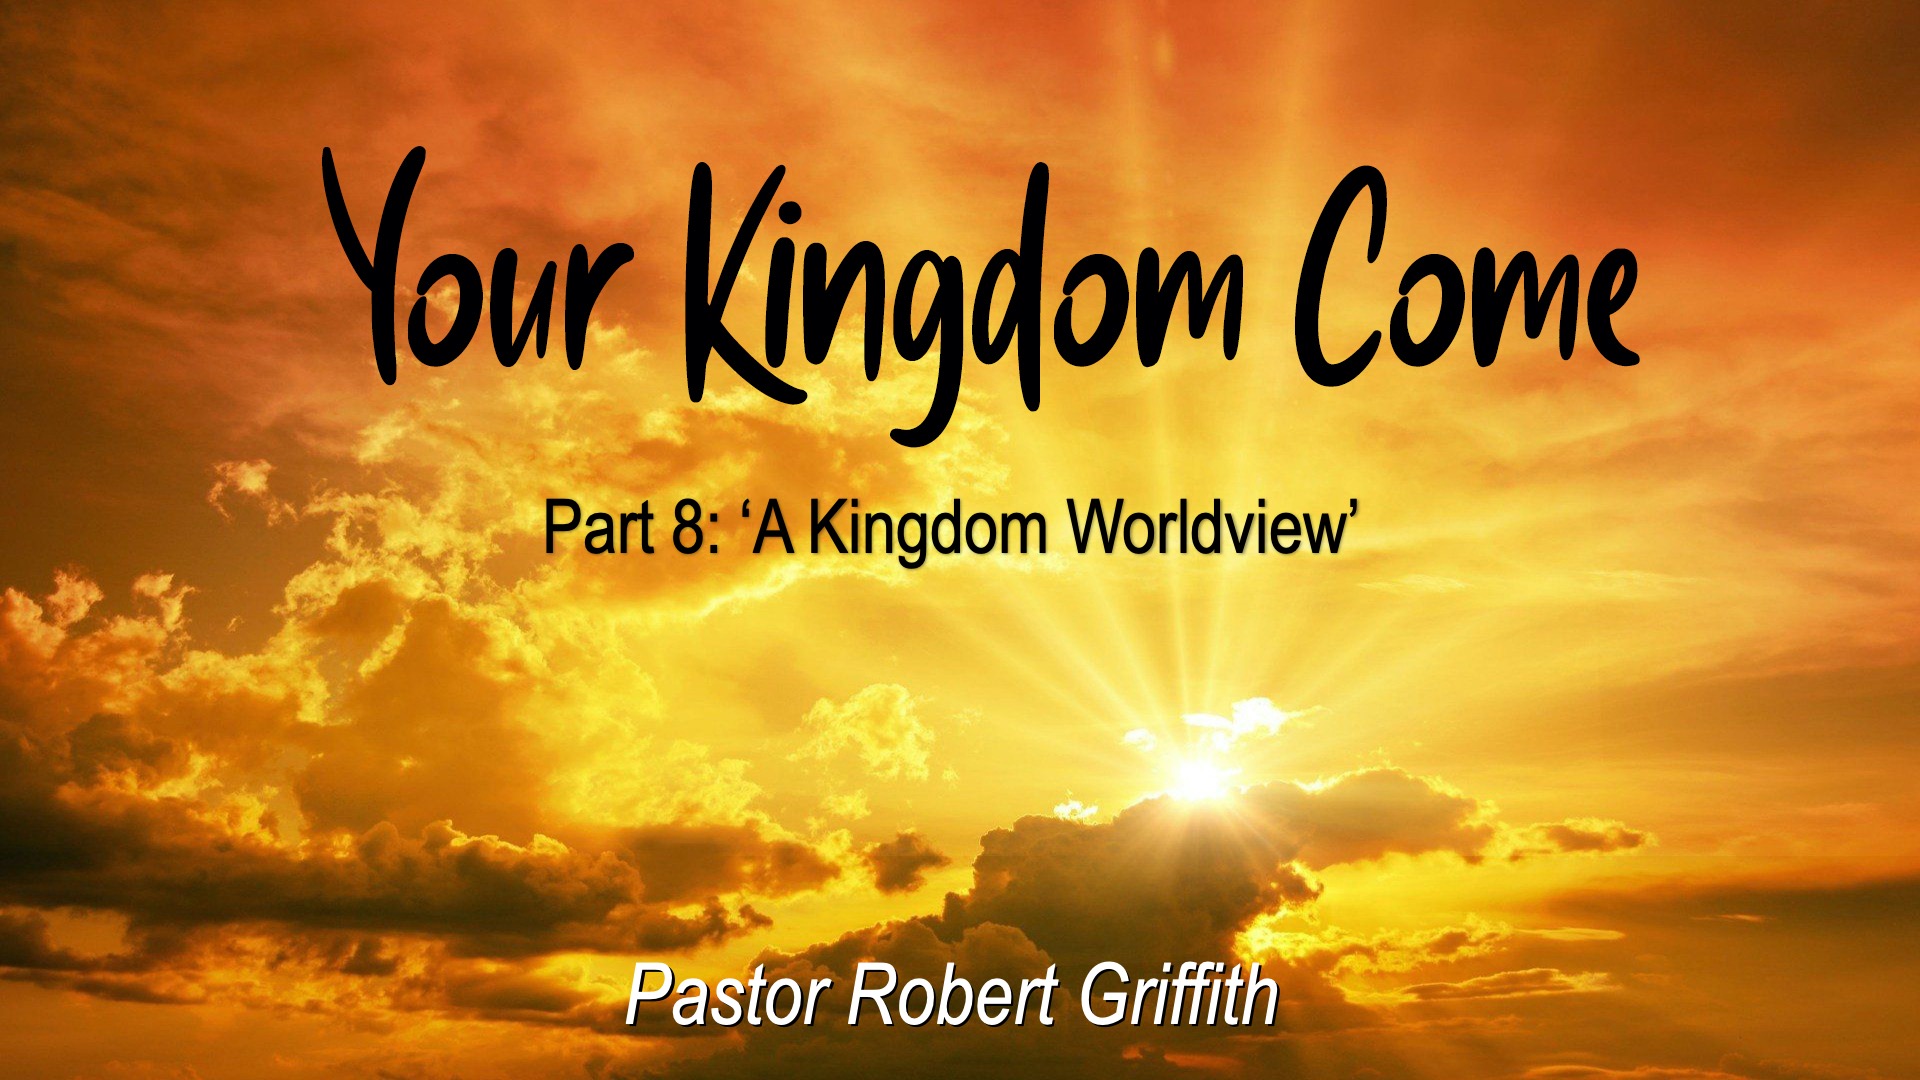 Your Kingdom Come (8)‘A Kingdom Worldview’